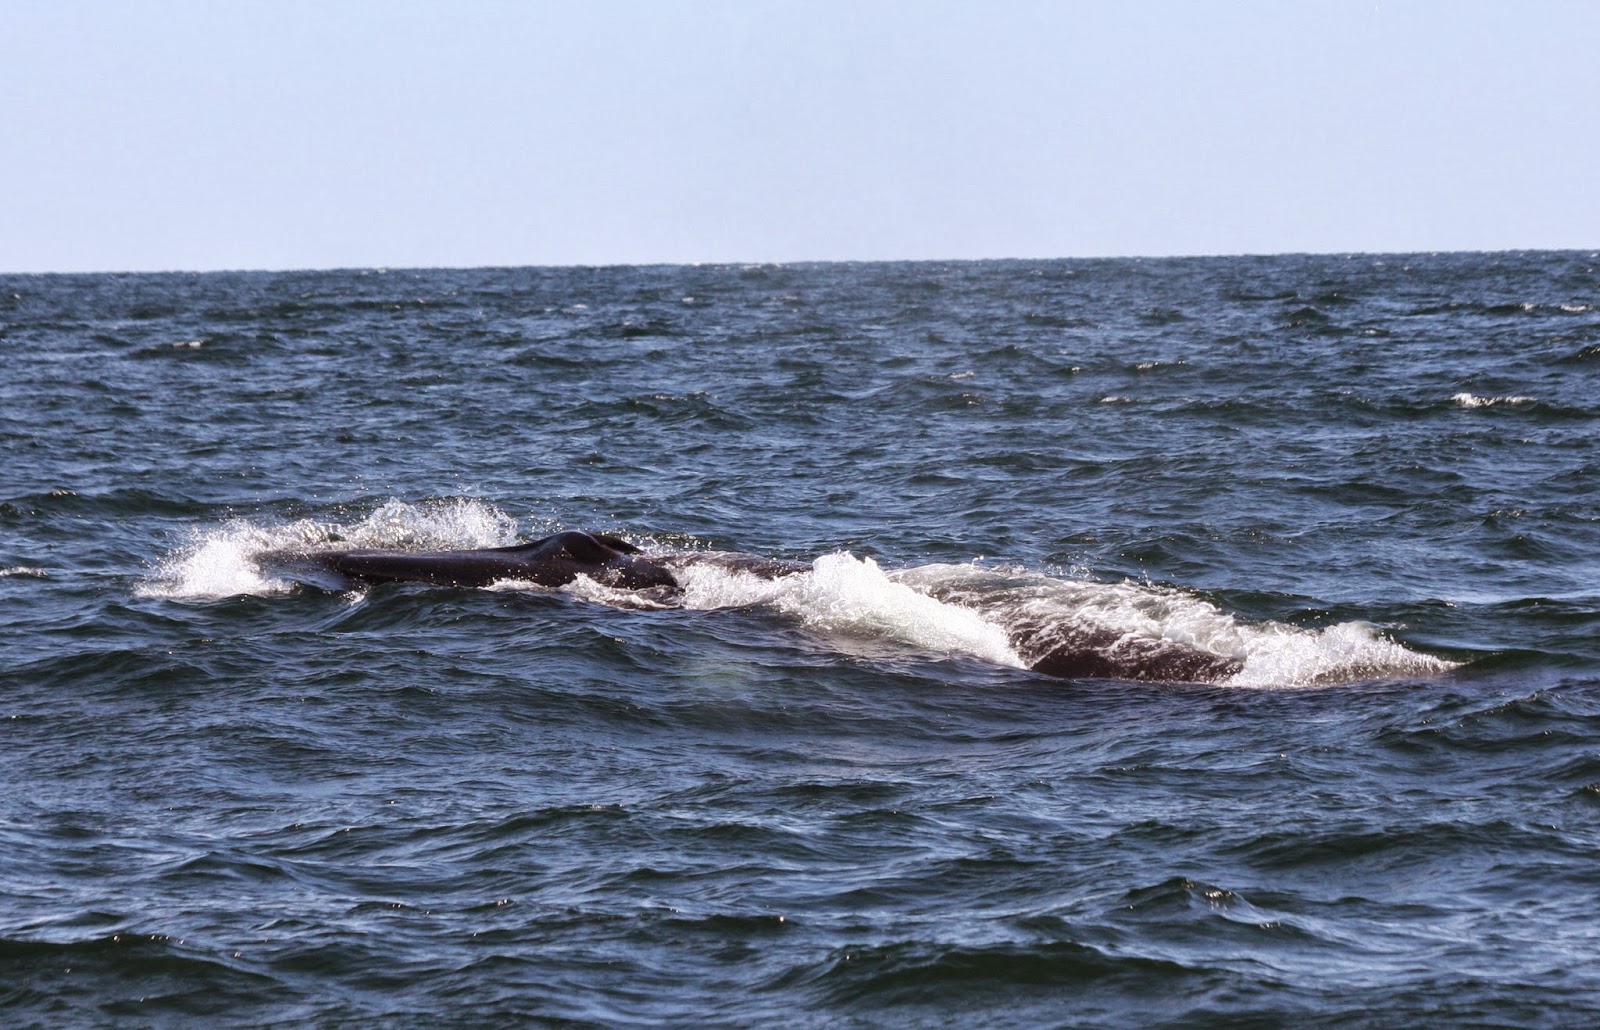 Blue Ocean Society's Whale Sightings
